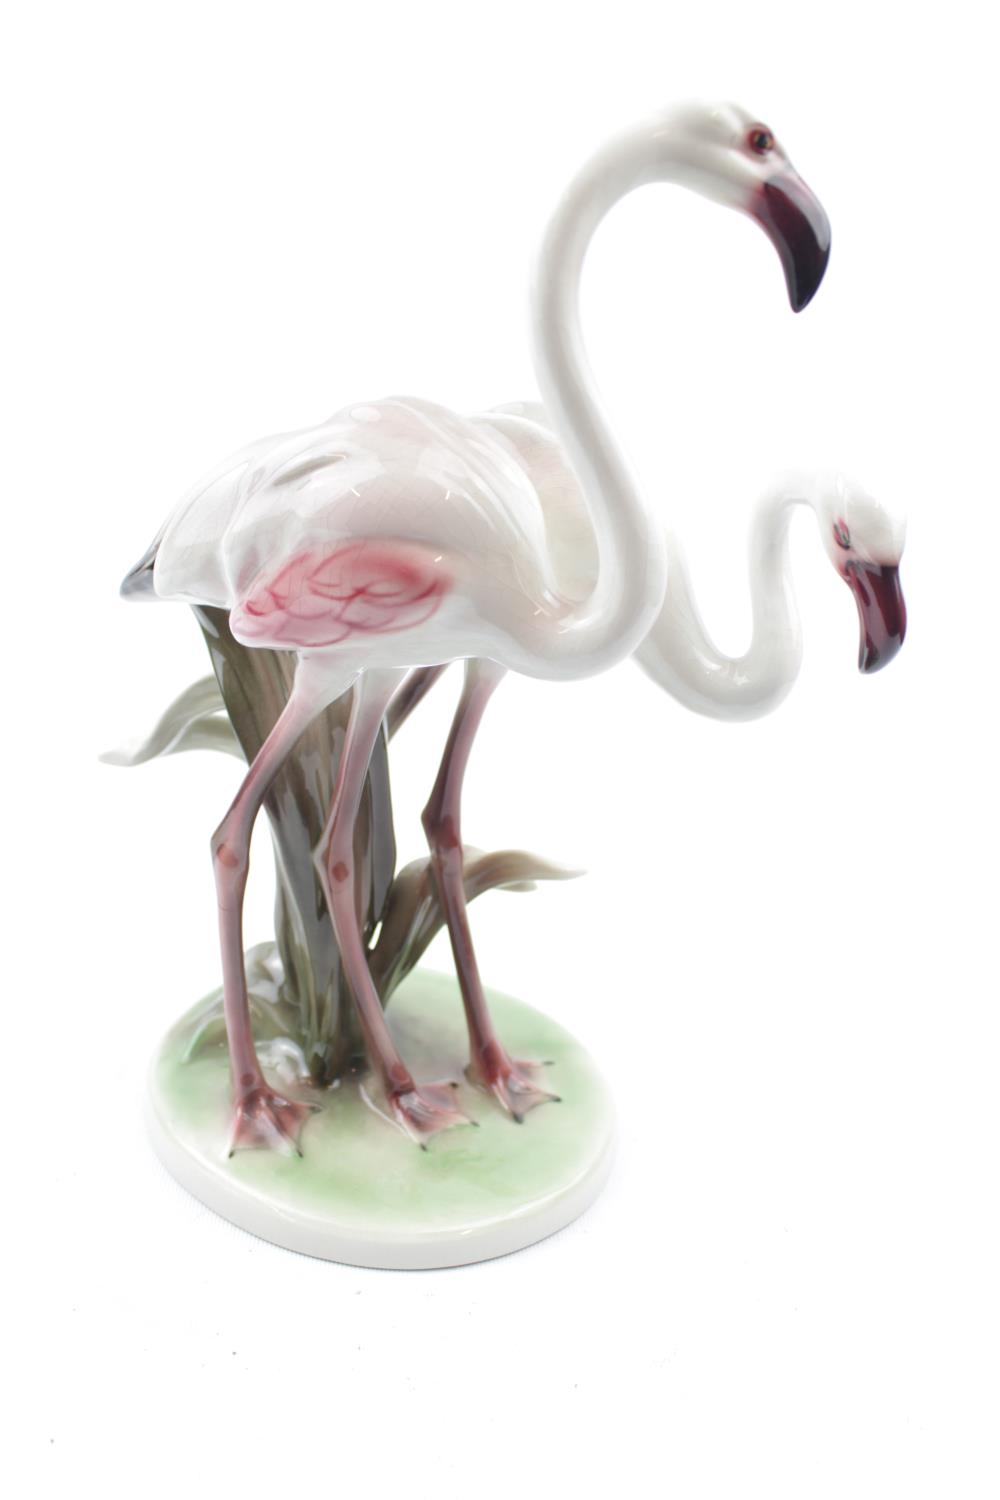 Keramos Wien figure of Flamingos 31cm in Height - Image 2 of 3